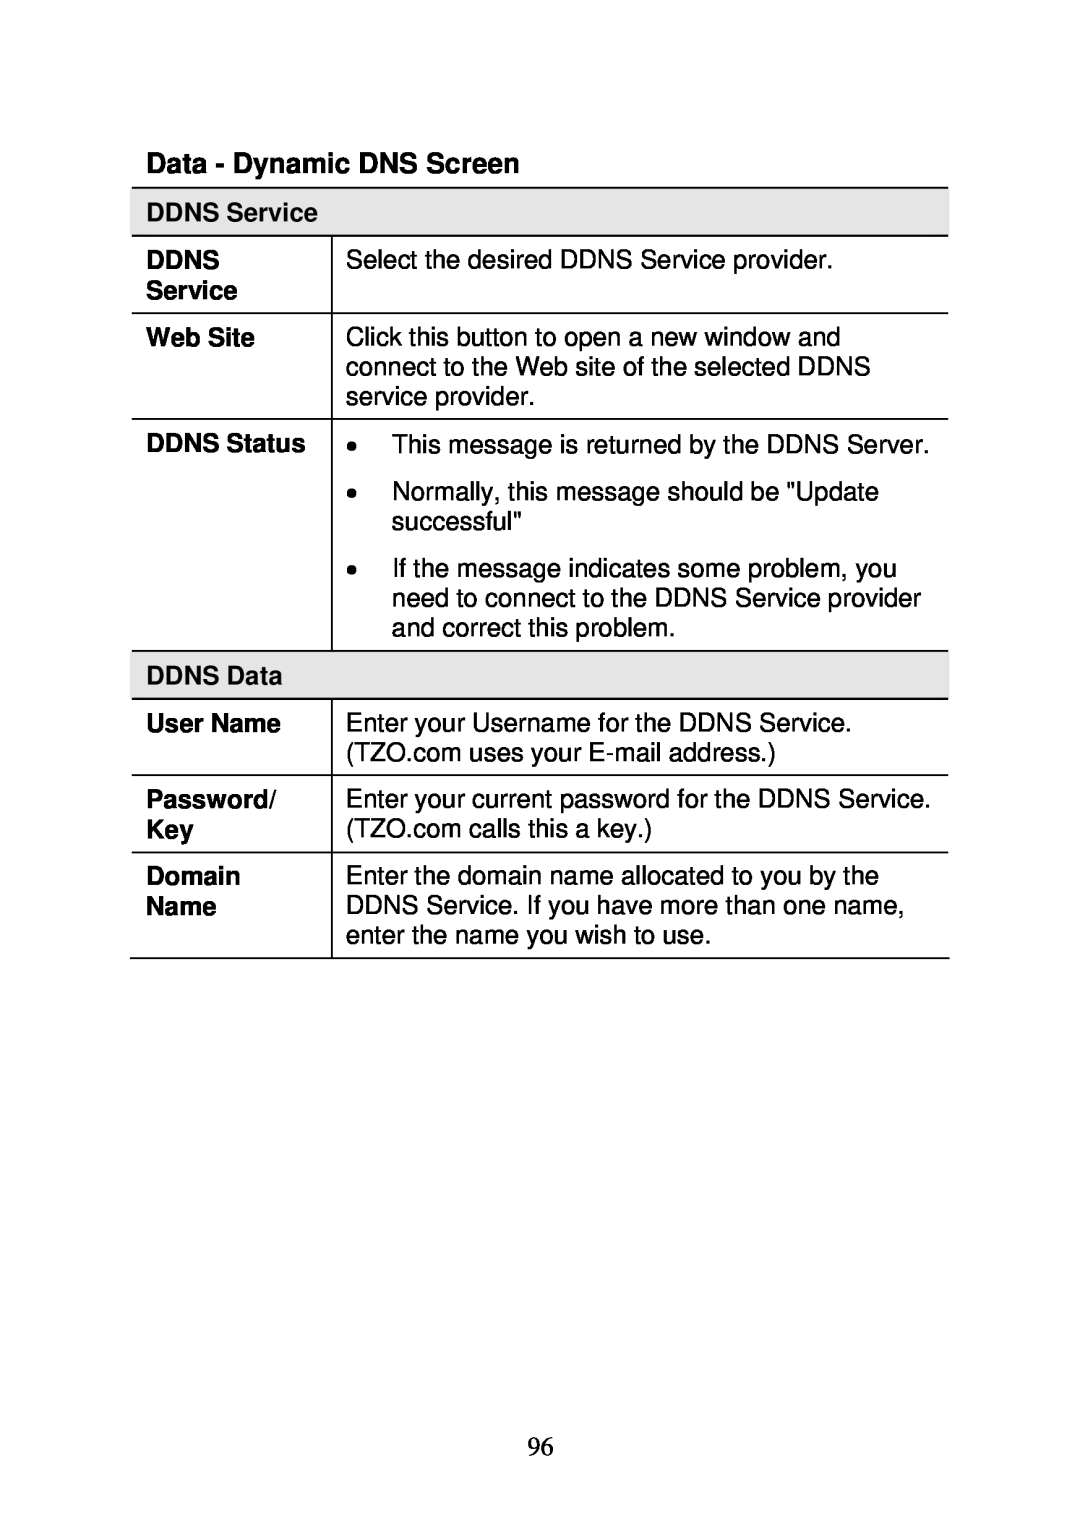 3Com WBR-6000 Data - Dynamic DNS Screen, DDNS Service, Ddns, Web Site, DDNS Status, DDNS Data, User Name, Password, Domain 